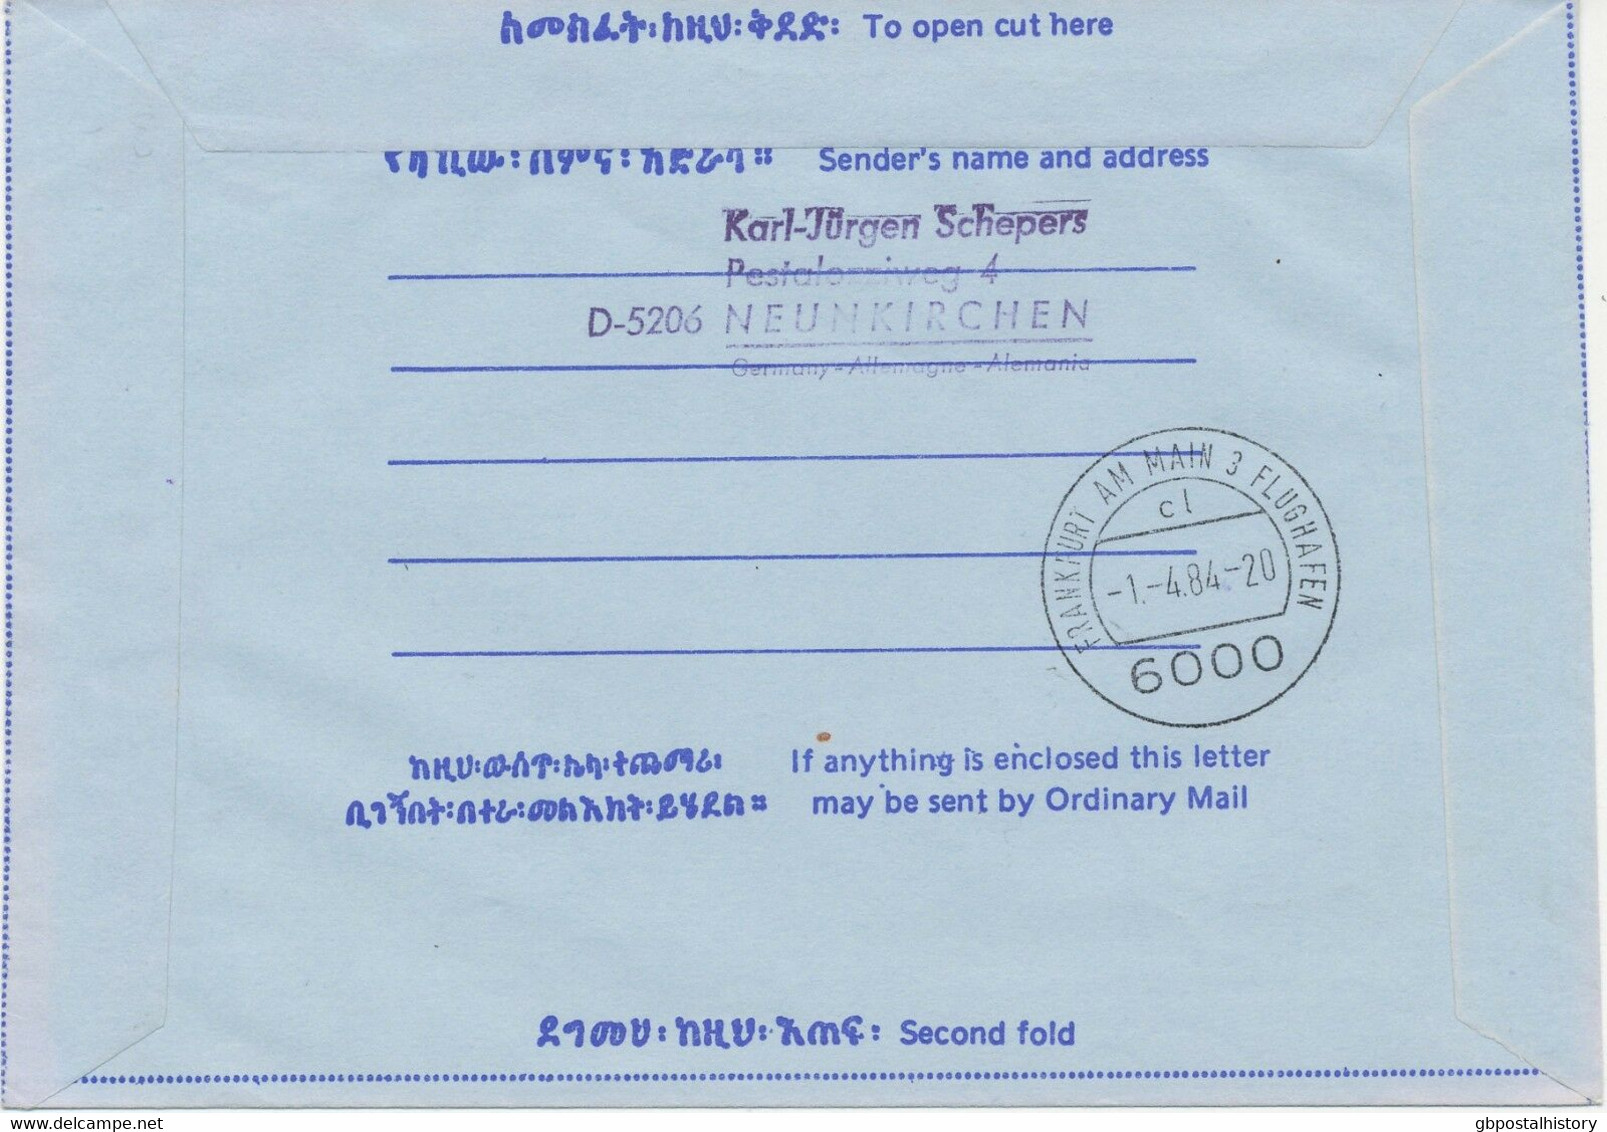 ETHIOPIA 1984 50C Capricorn Air Letter First Flight LH 537 ADDIS ABABA-FRANKFORT - Etiopía